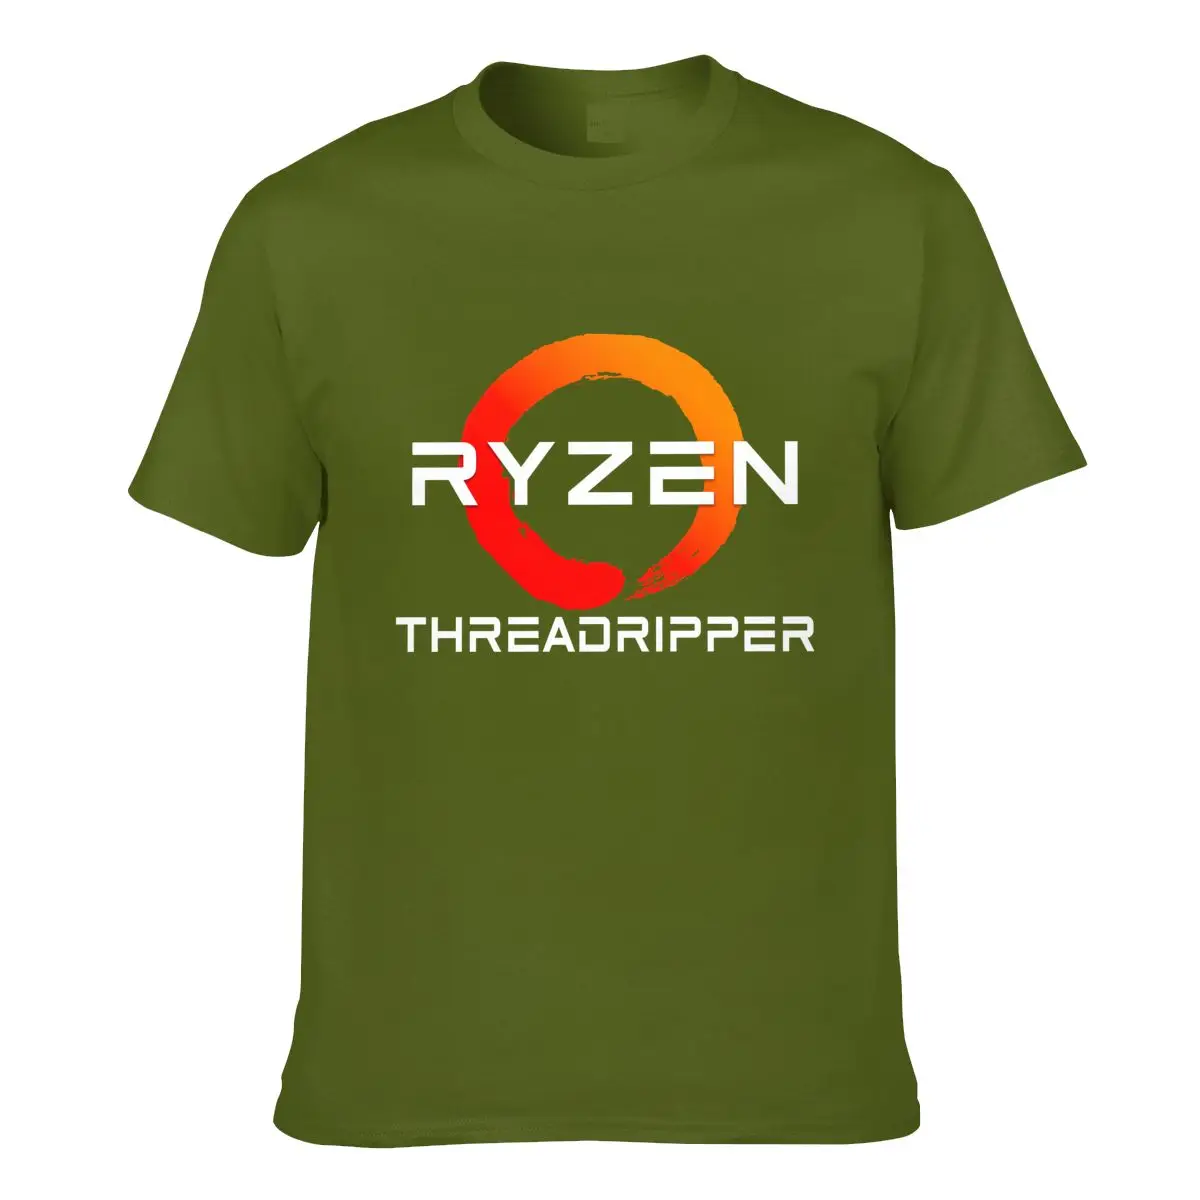 Amd Ryzen Threadripper T-shirt Tee Shirt Top Unisex Vintage 